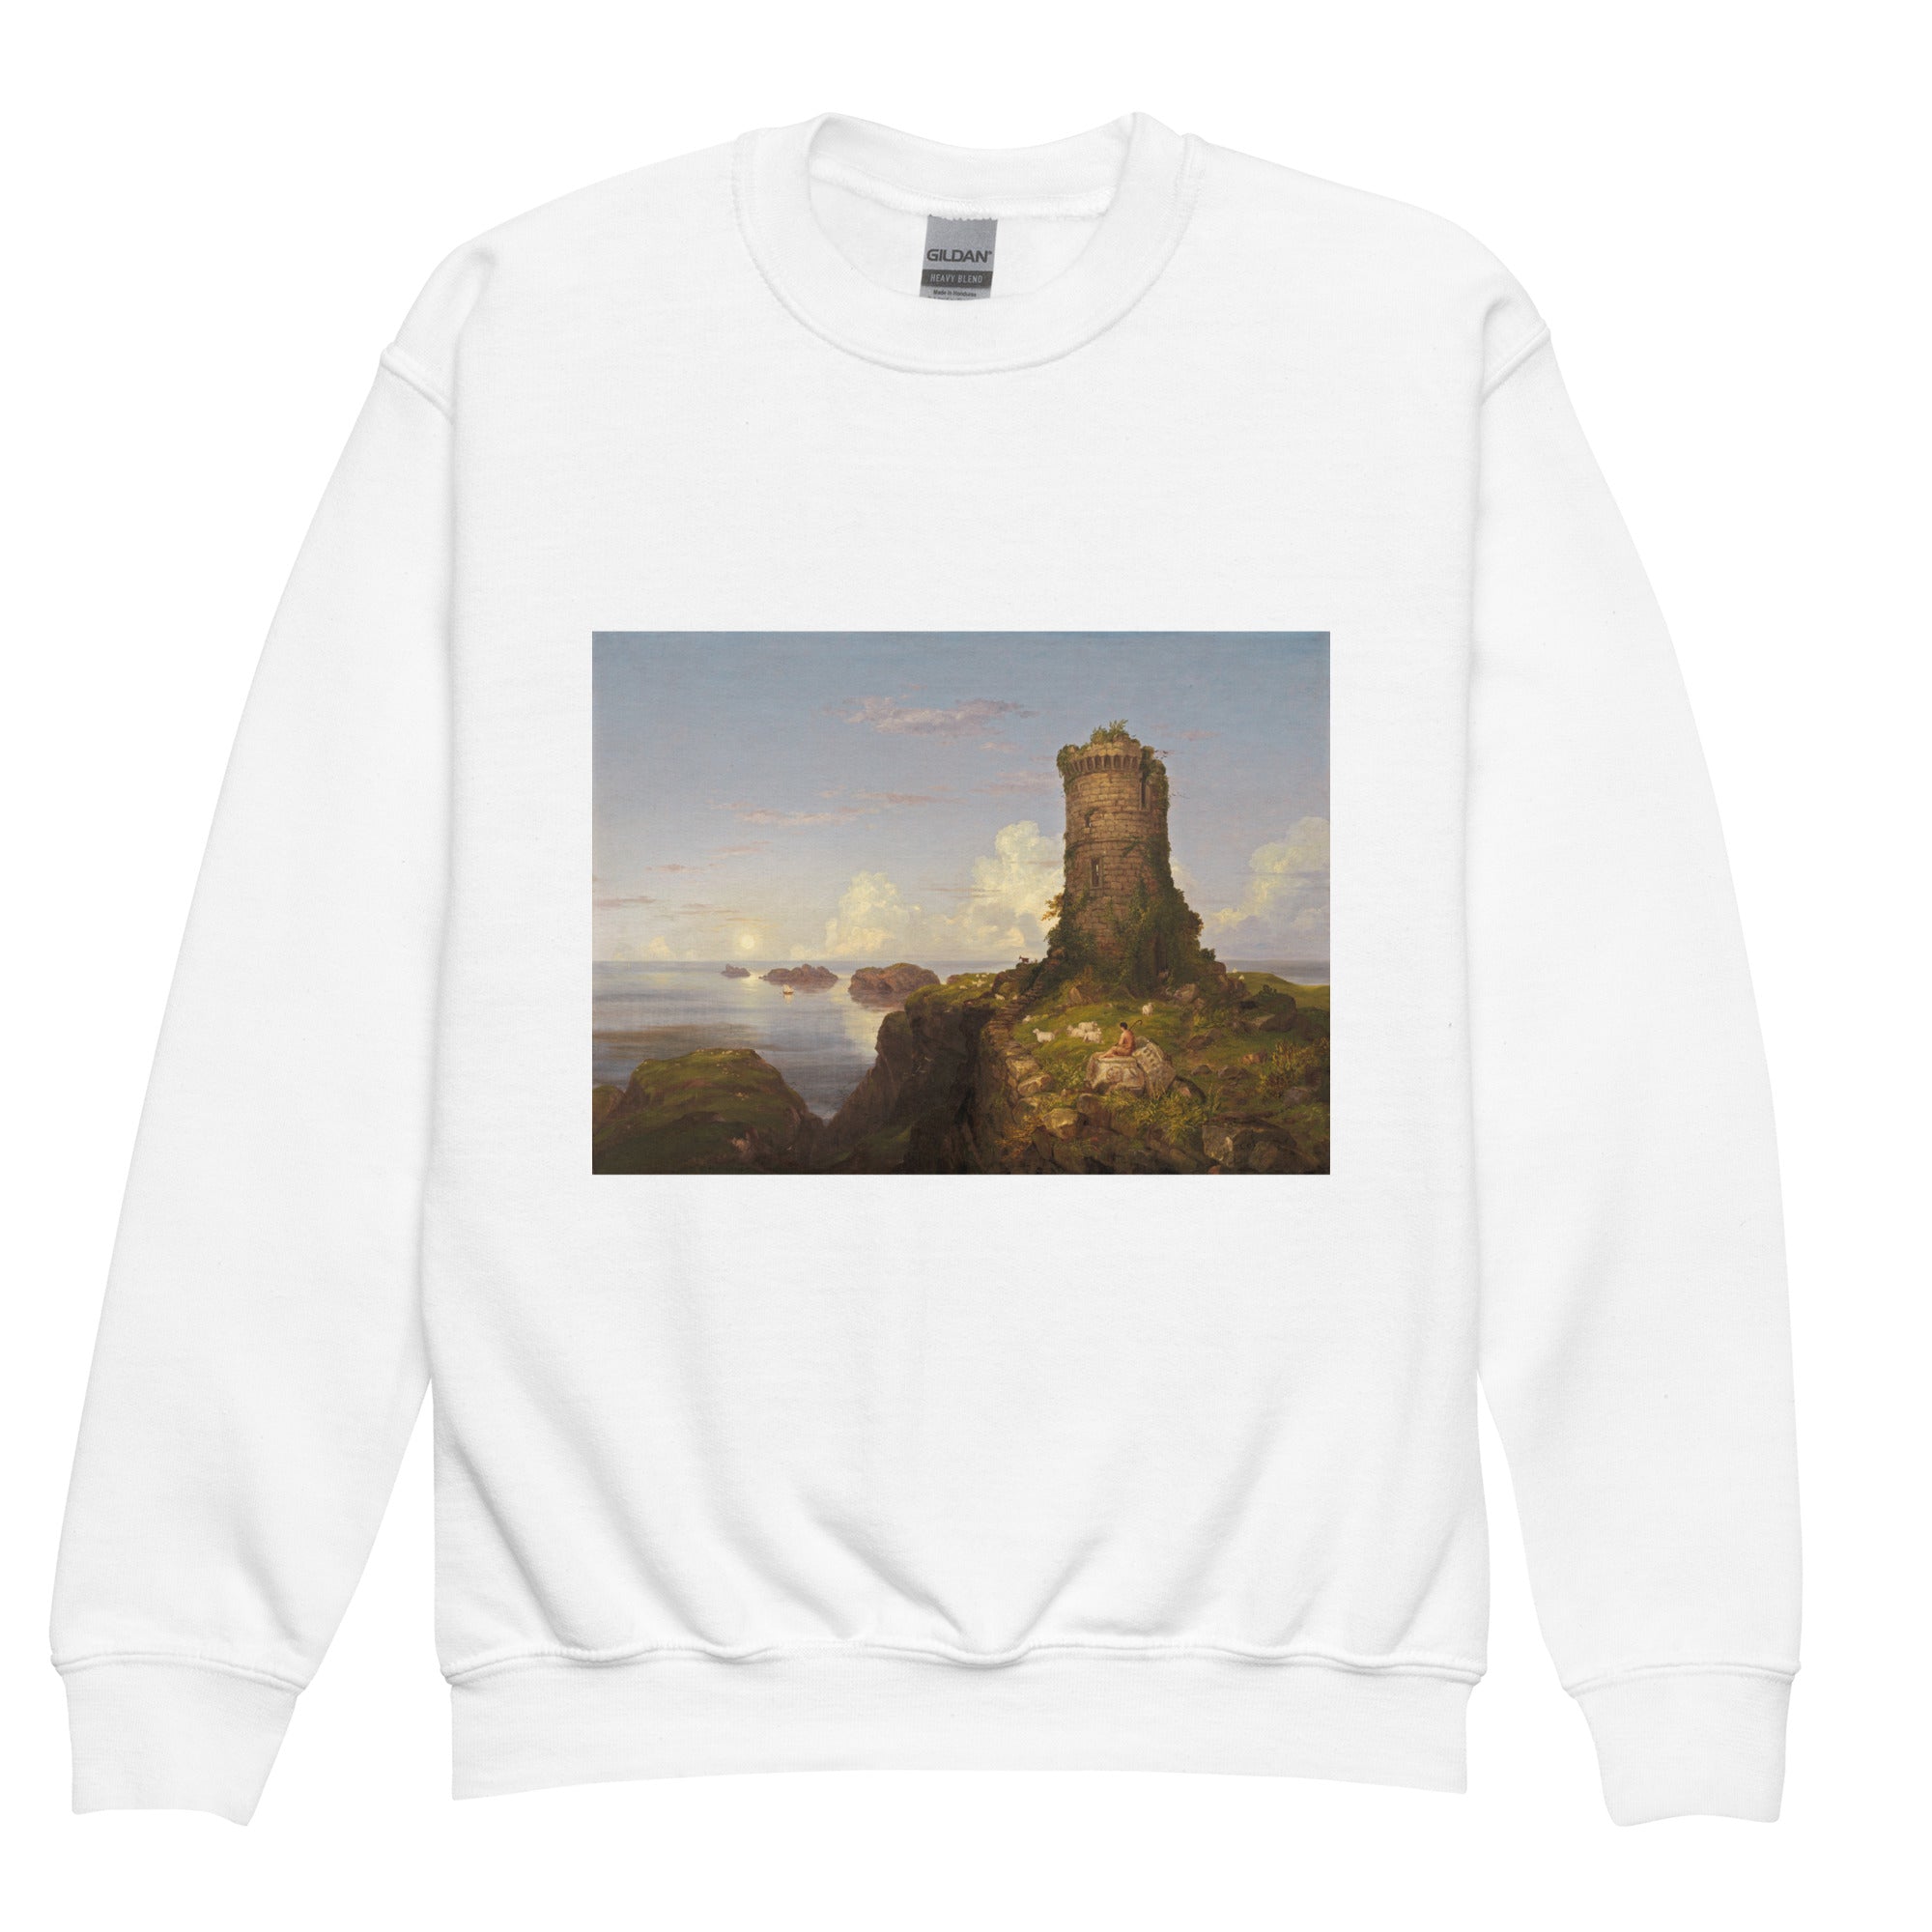 Thomas Cole 'Italian Coast Scene' Famous Painting Crewneck Sweatshirt | Premium Youth Art Sweatshirt